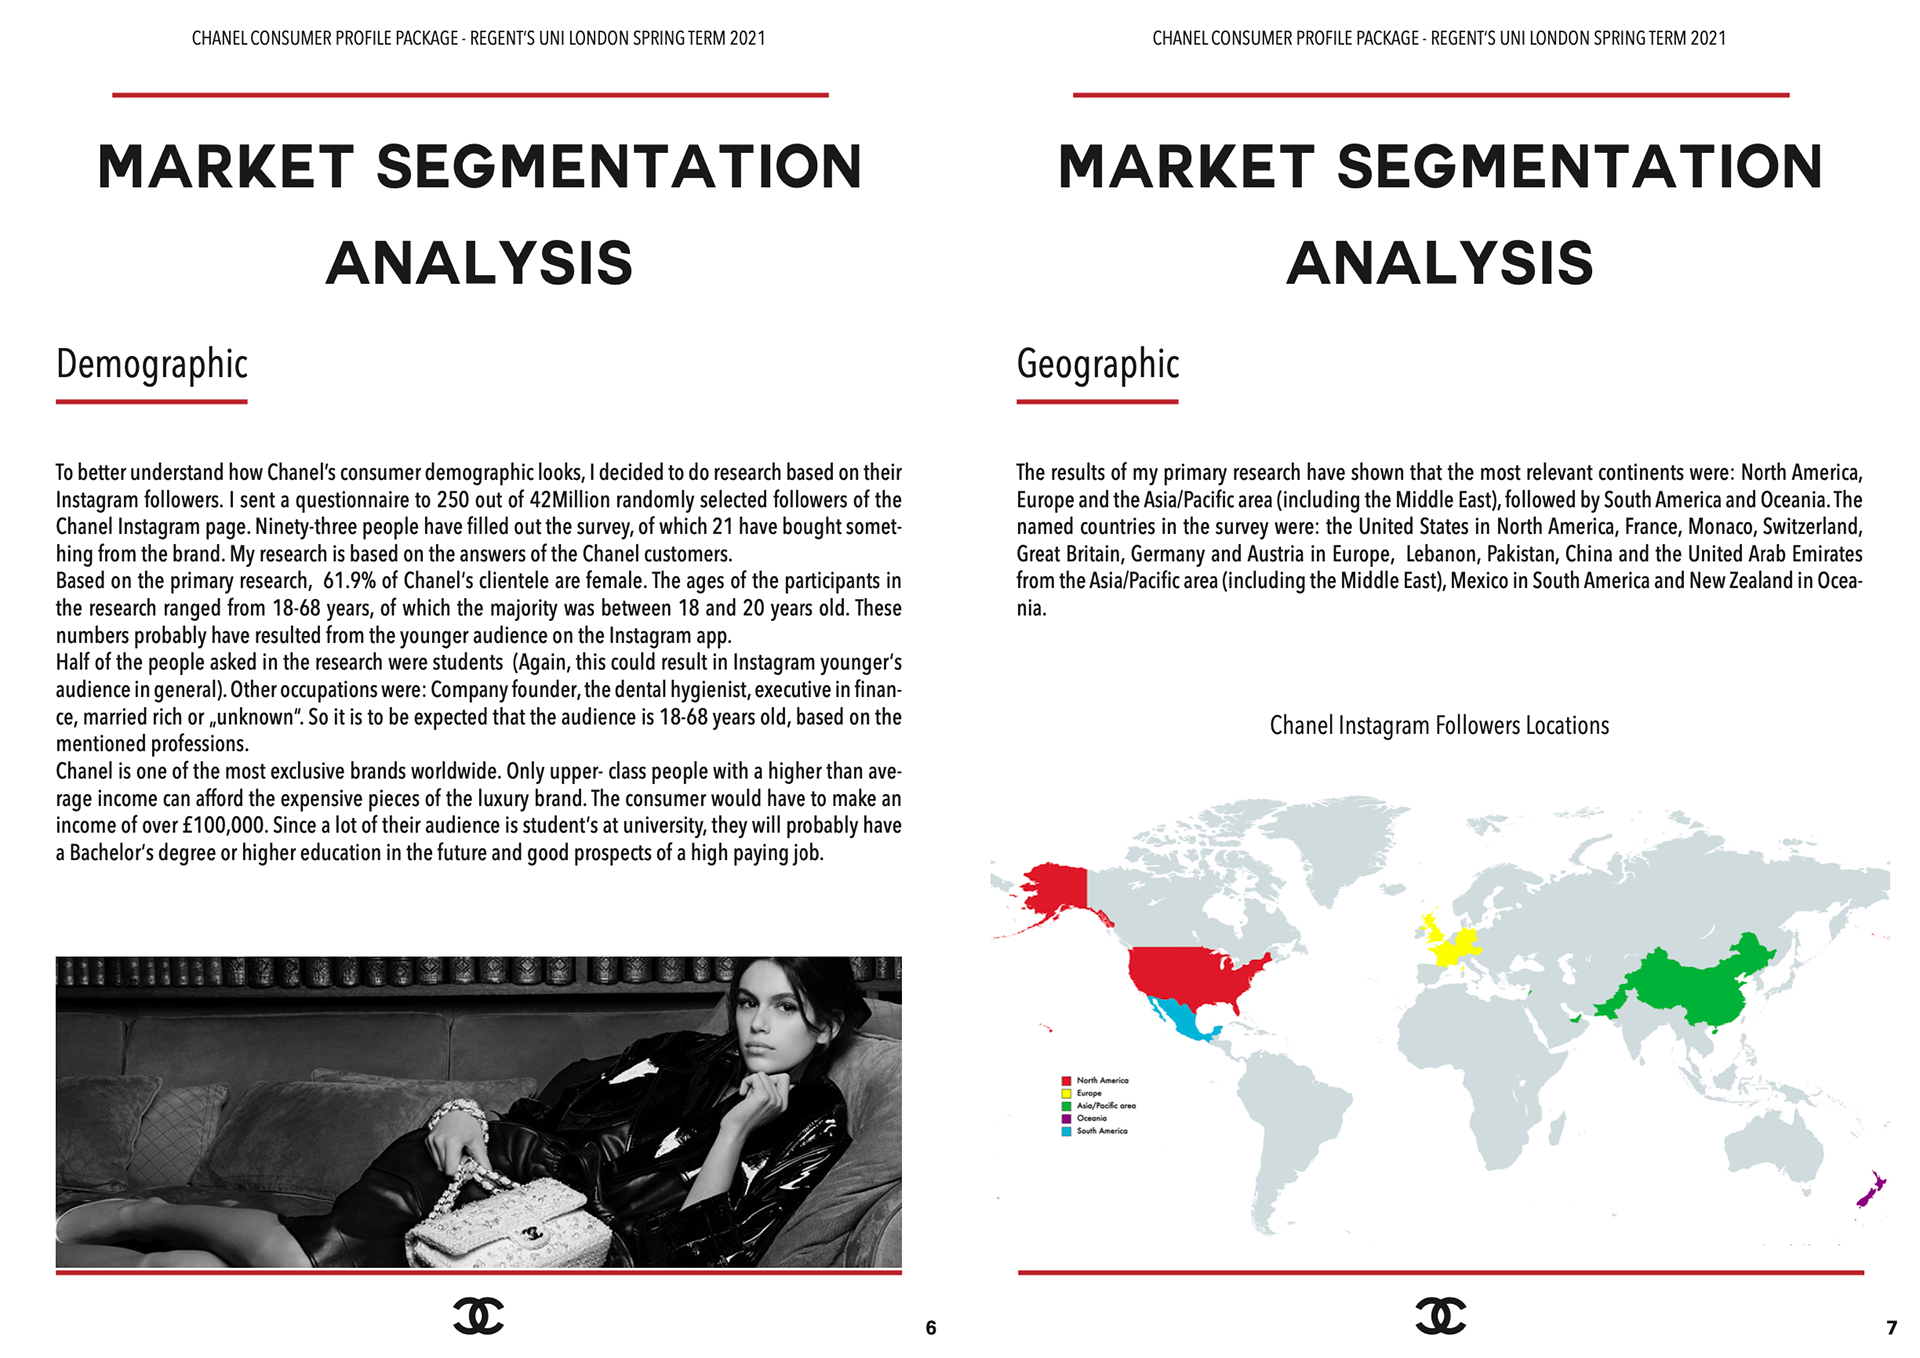 SWOT Analysis of Chanel